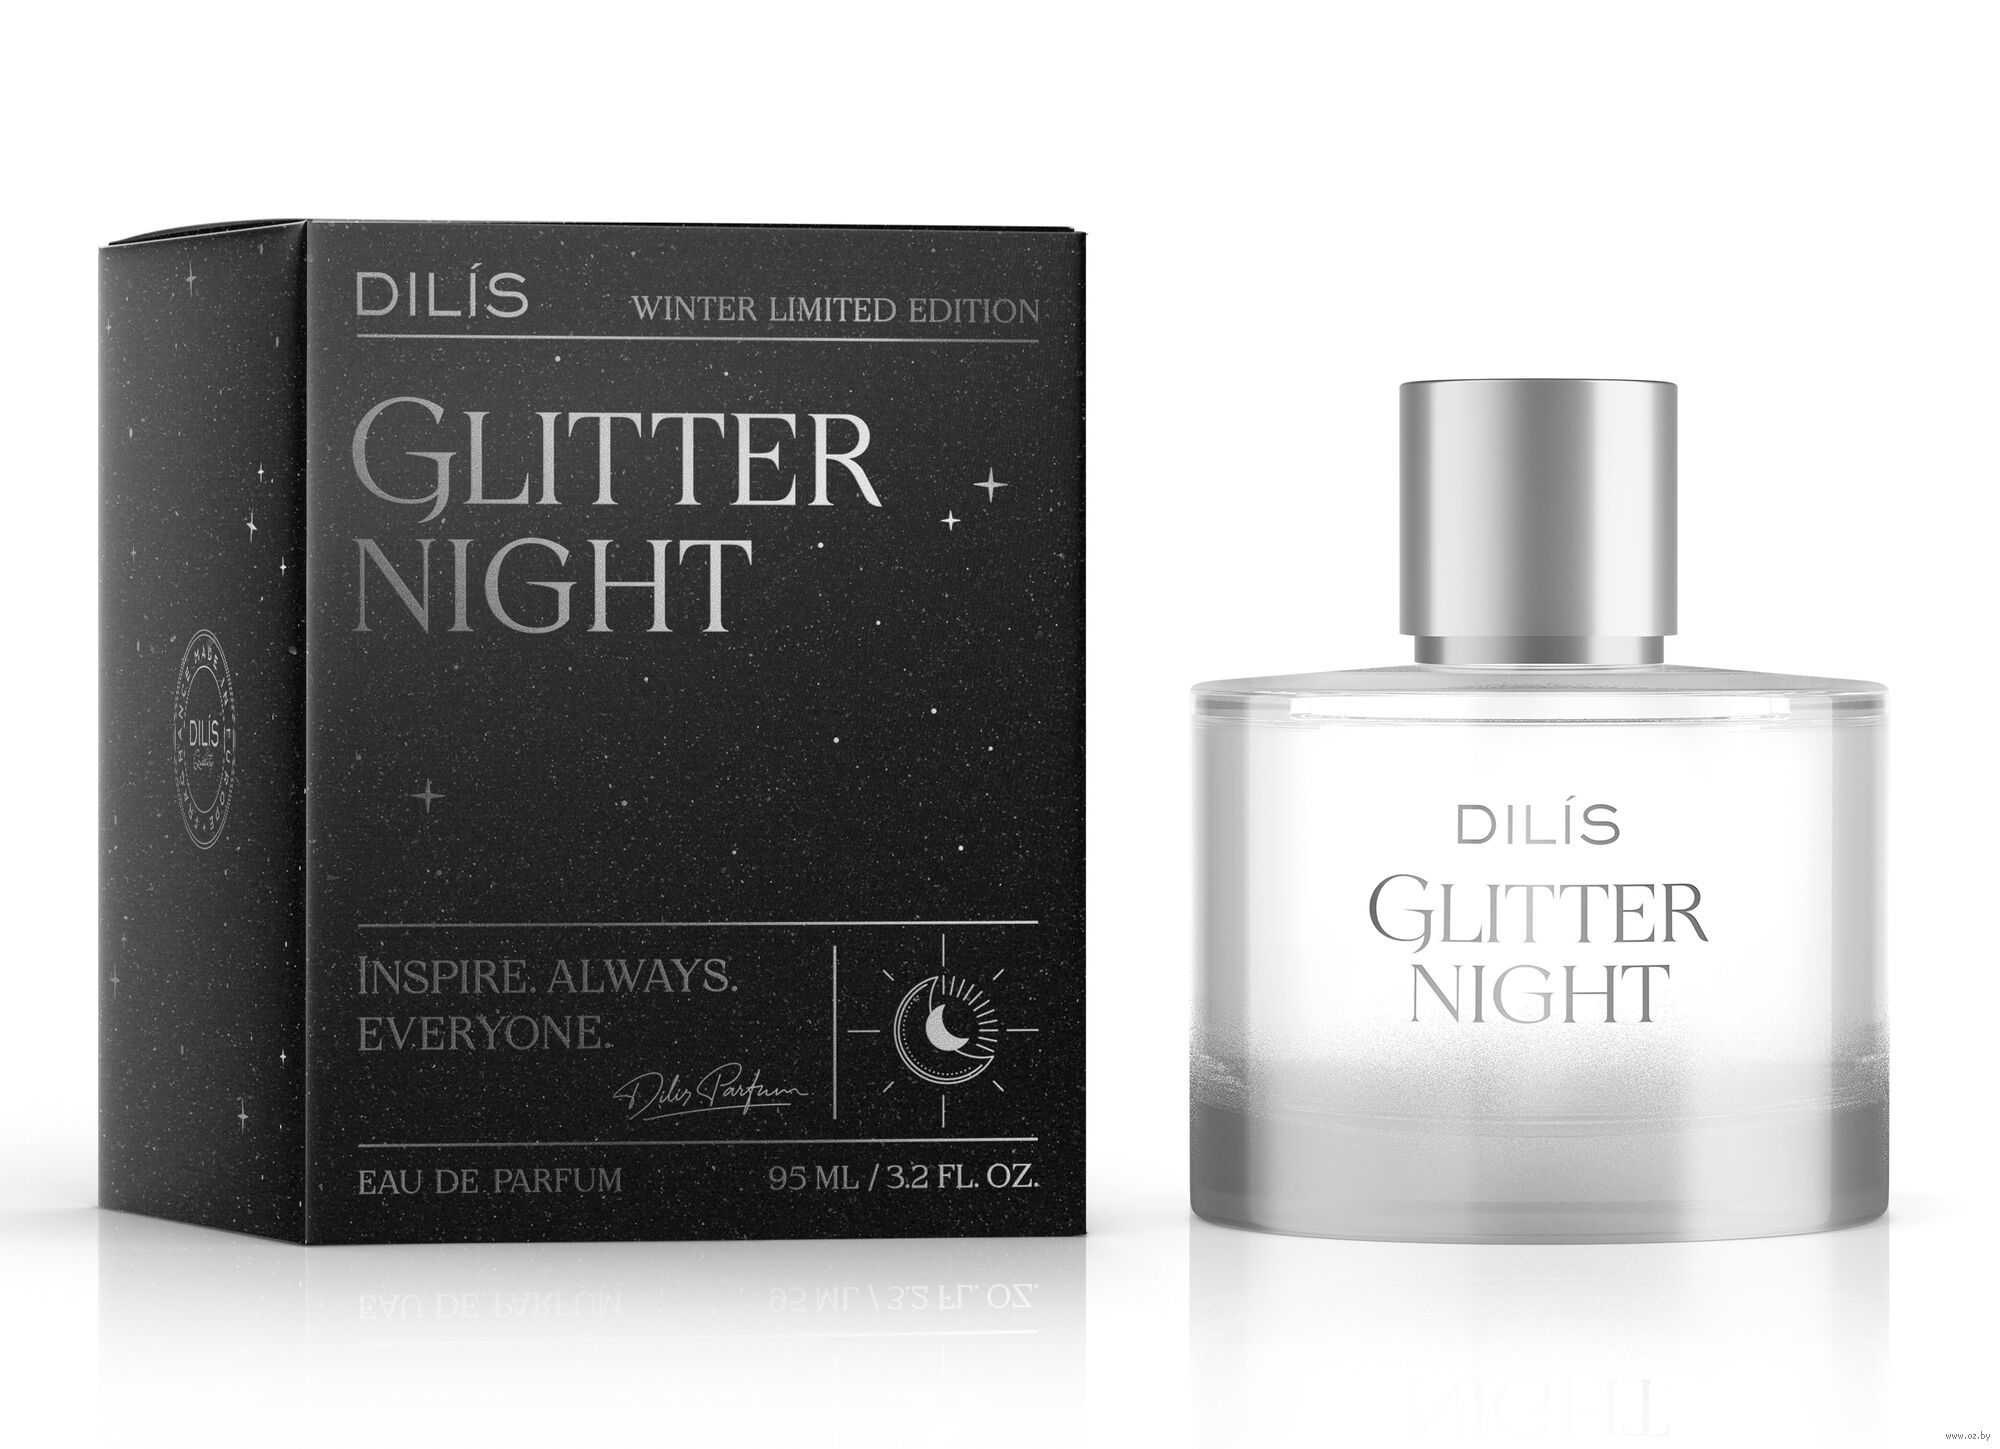 Парф вода для женщин winter limited edition glitter night 95ml dilis